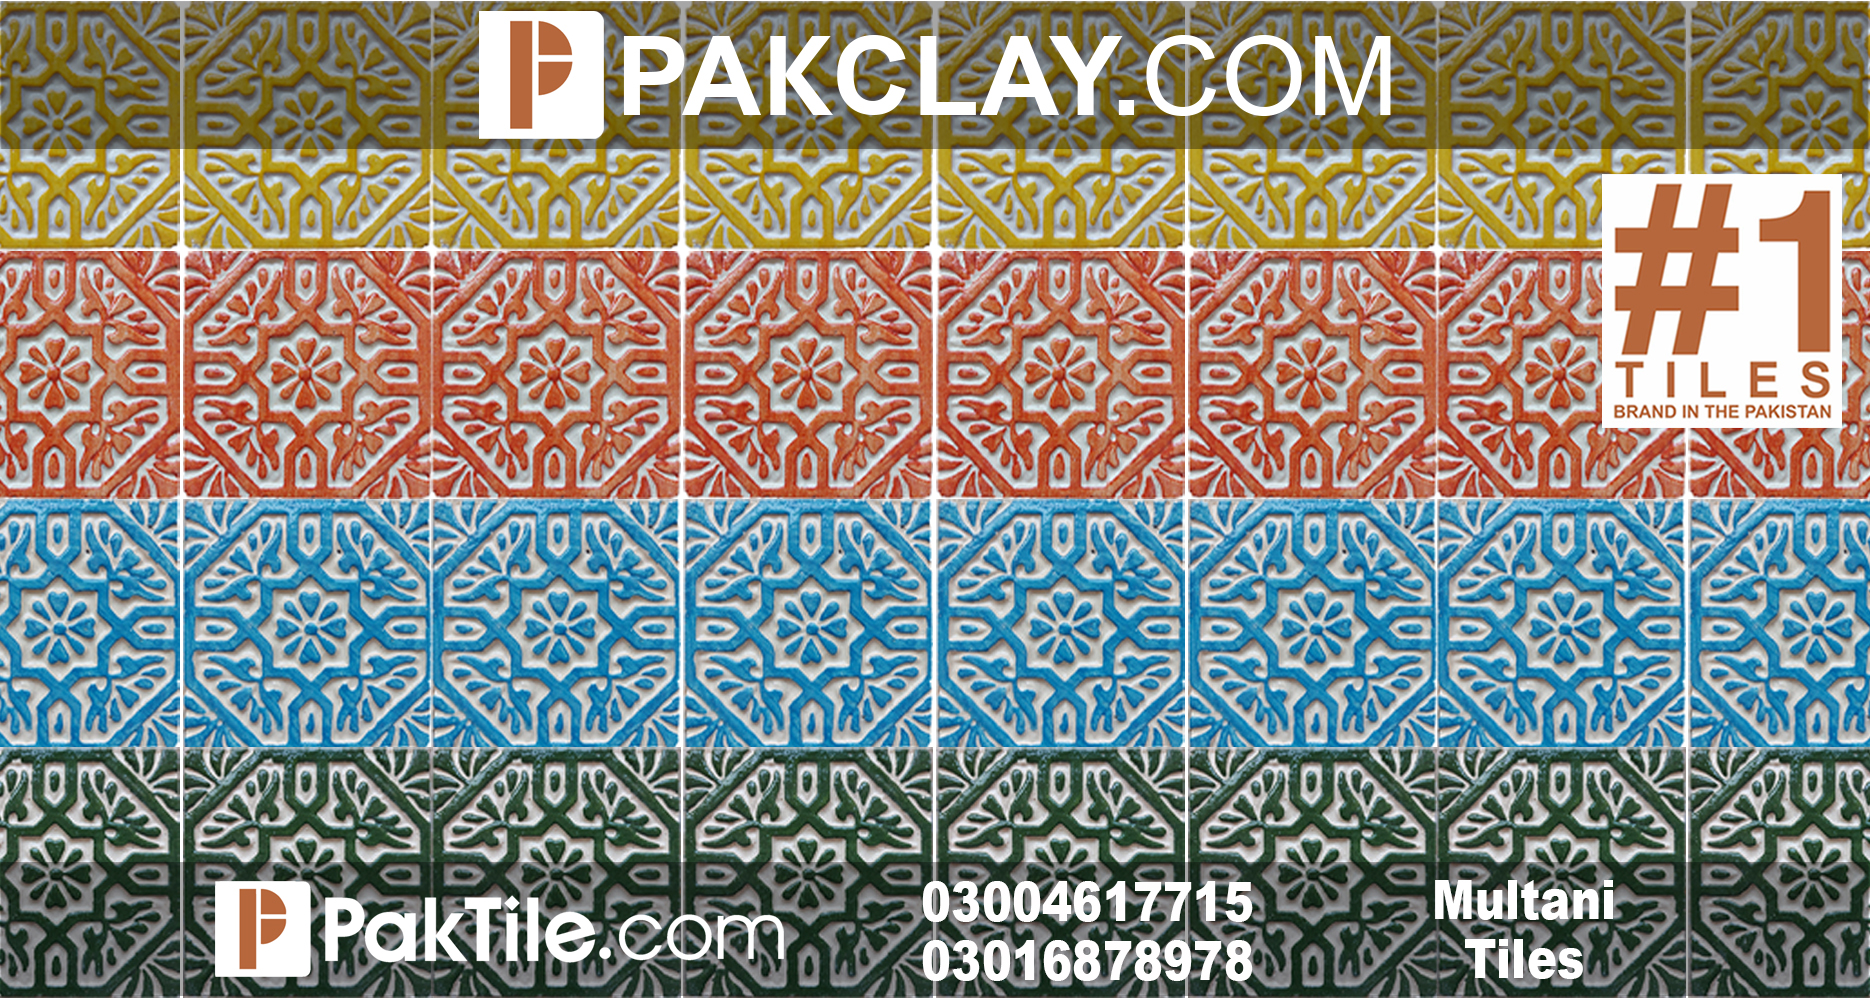 4 Multani Tiles images